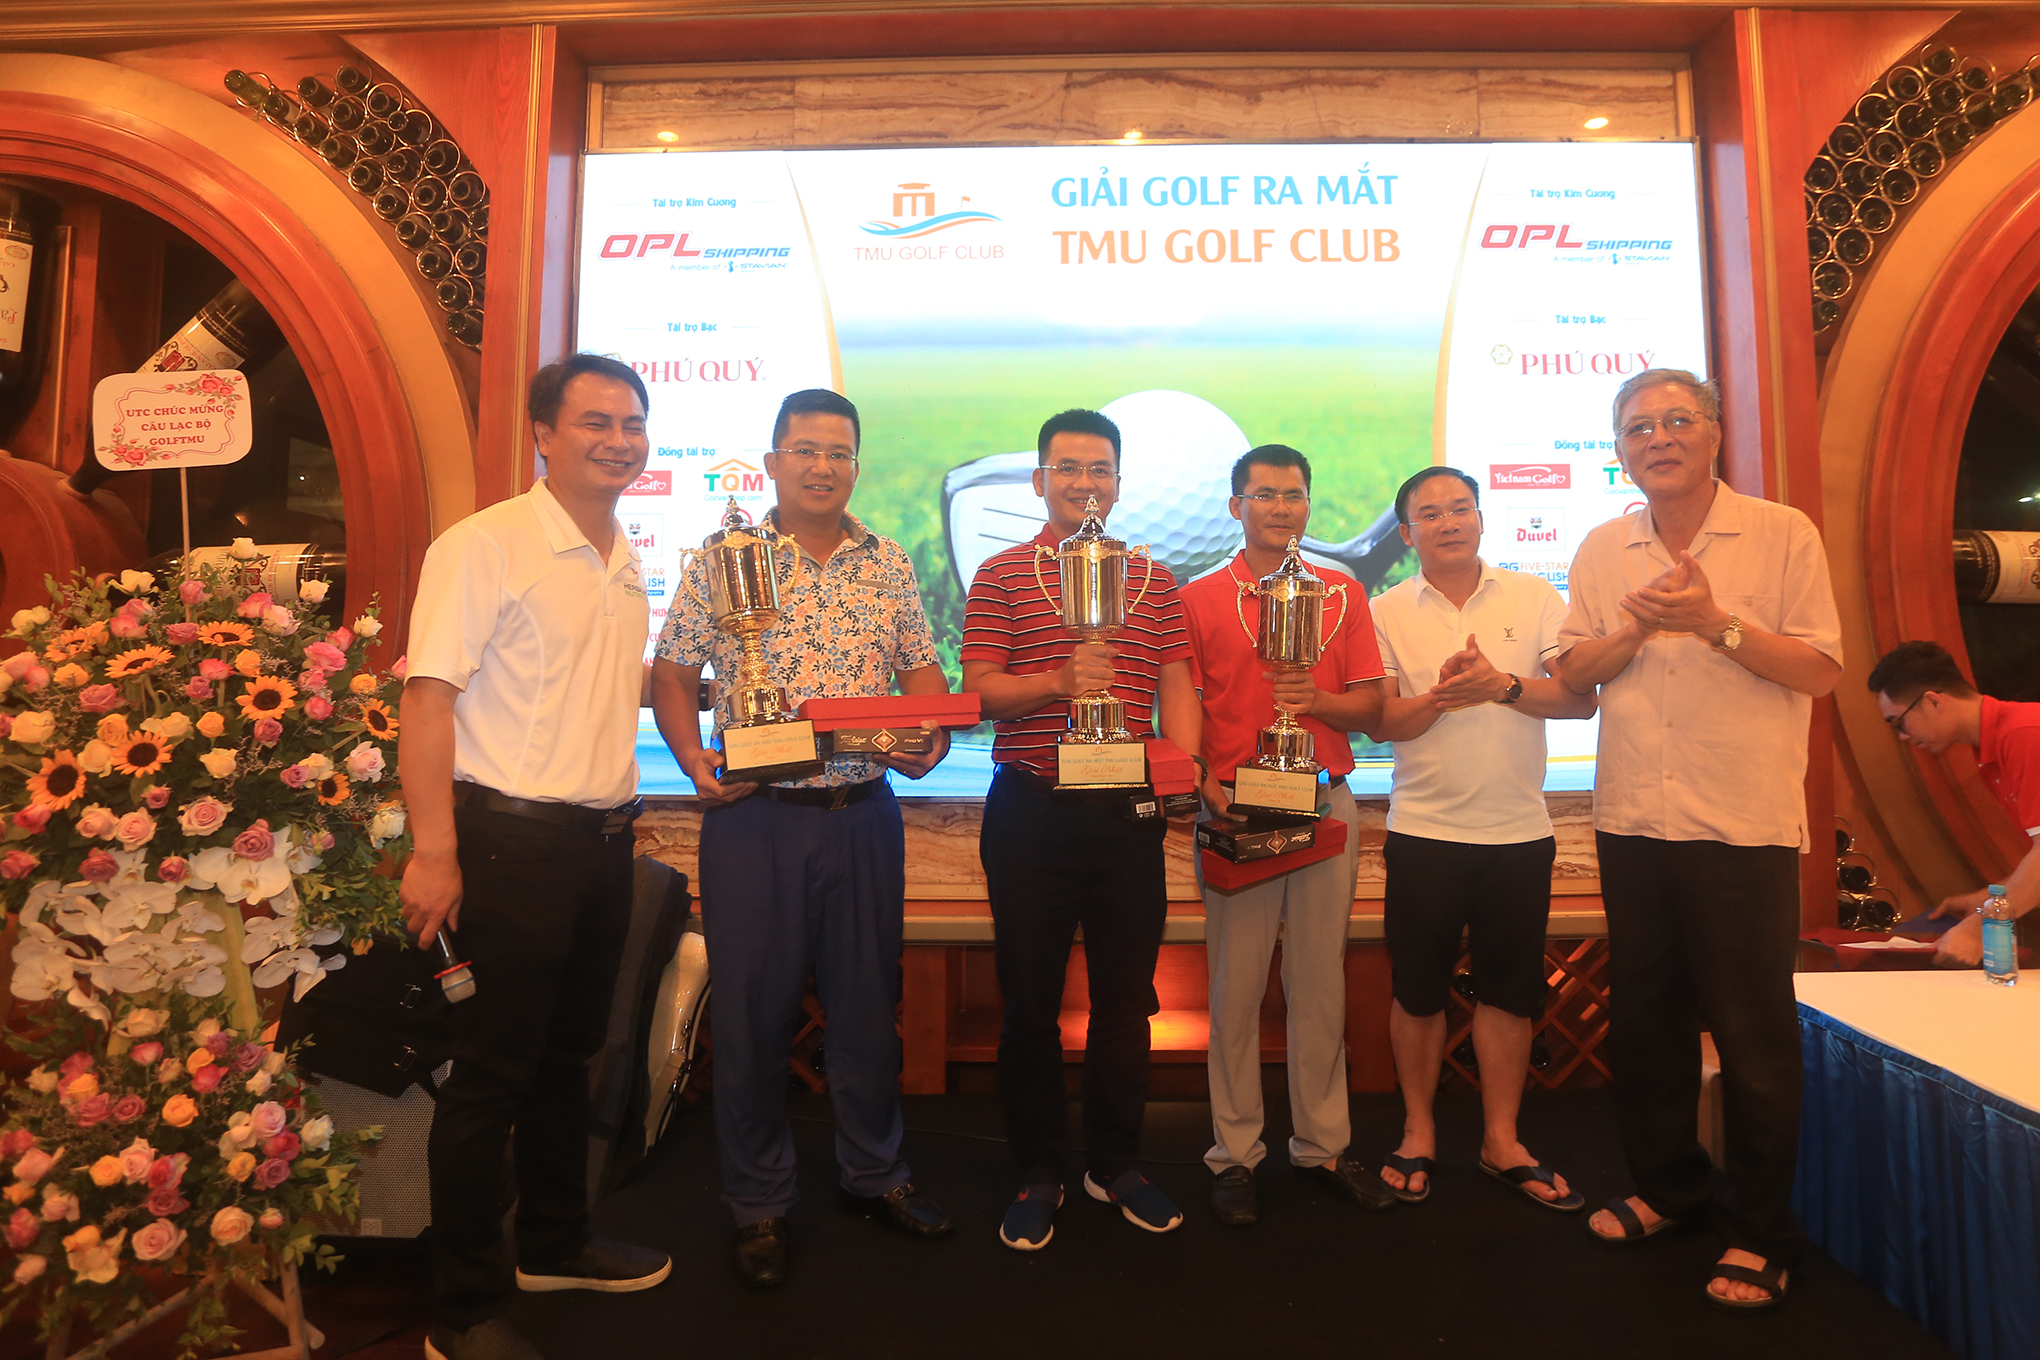 Gần 70 golfer tham dự giải golf ra mắt TMU Golf Club